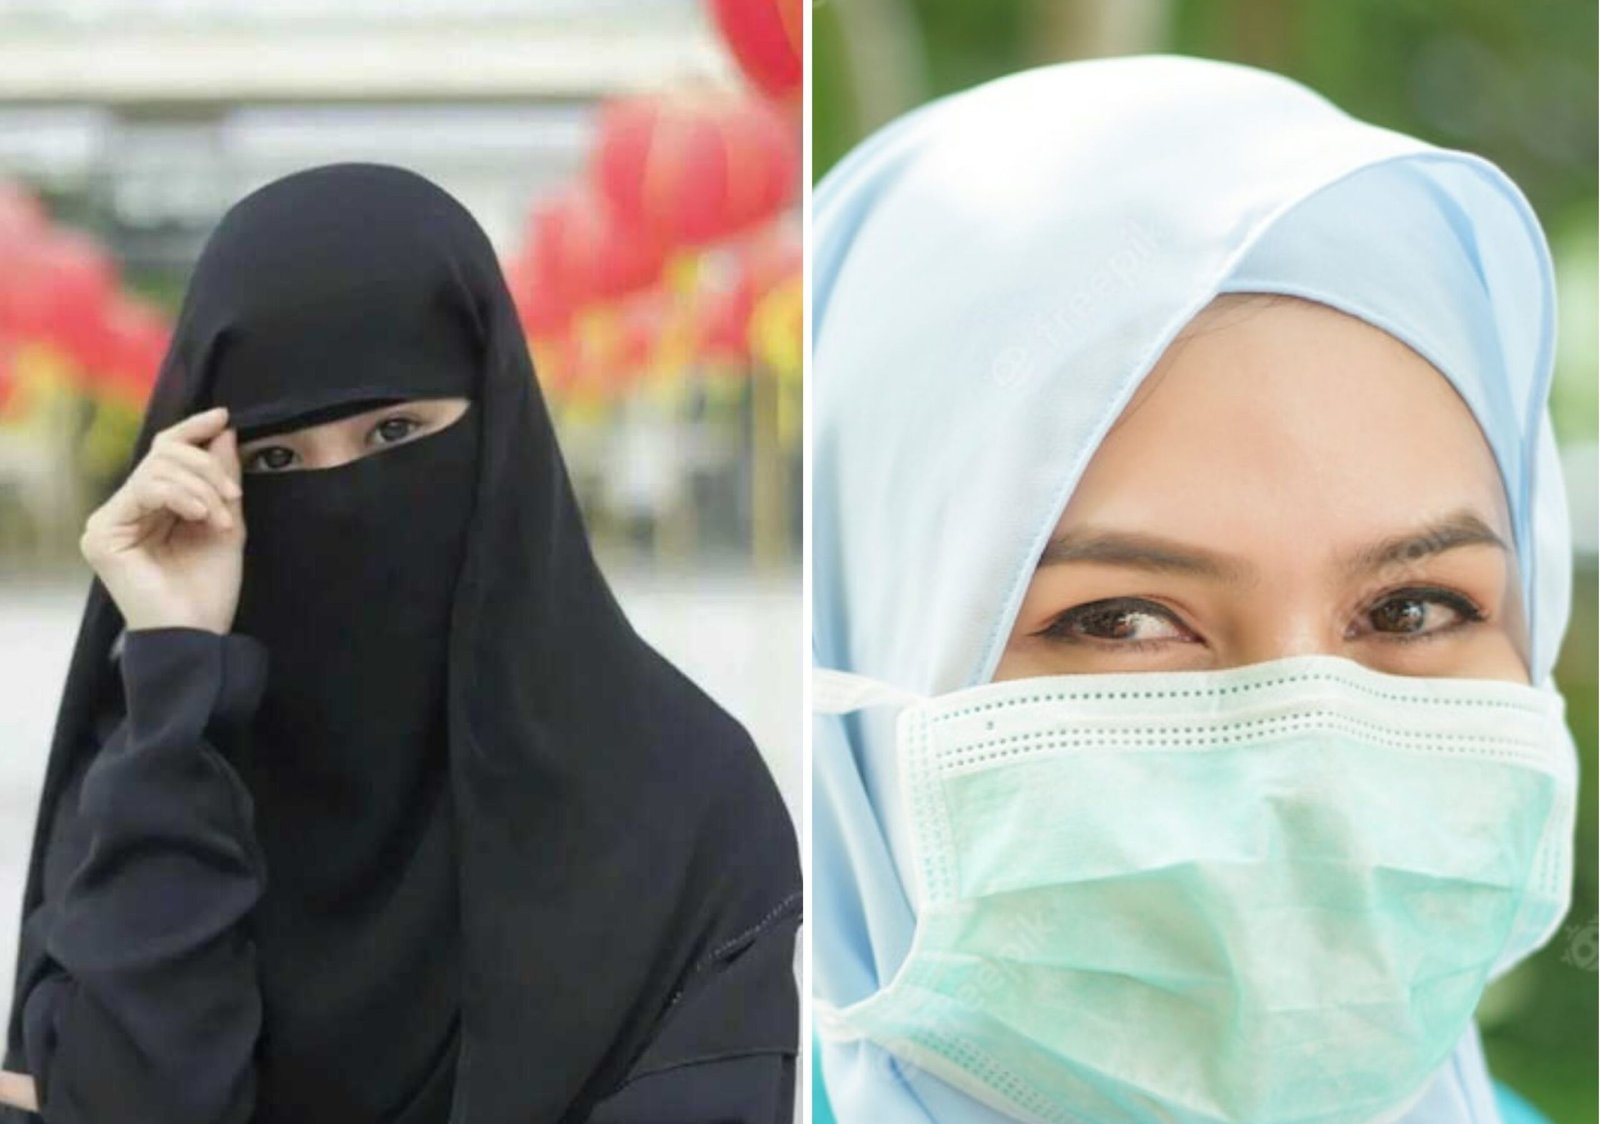 mask and burqa